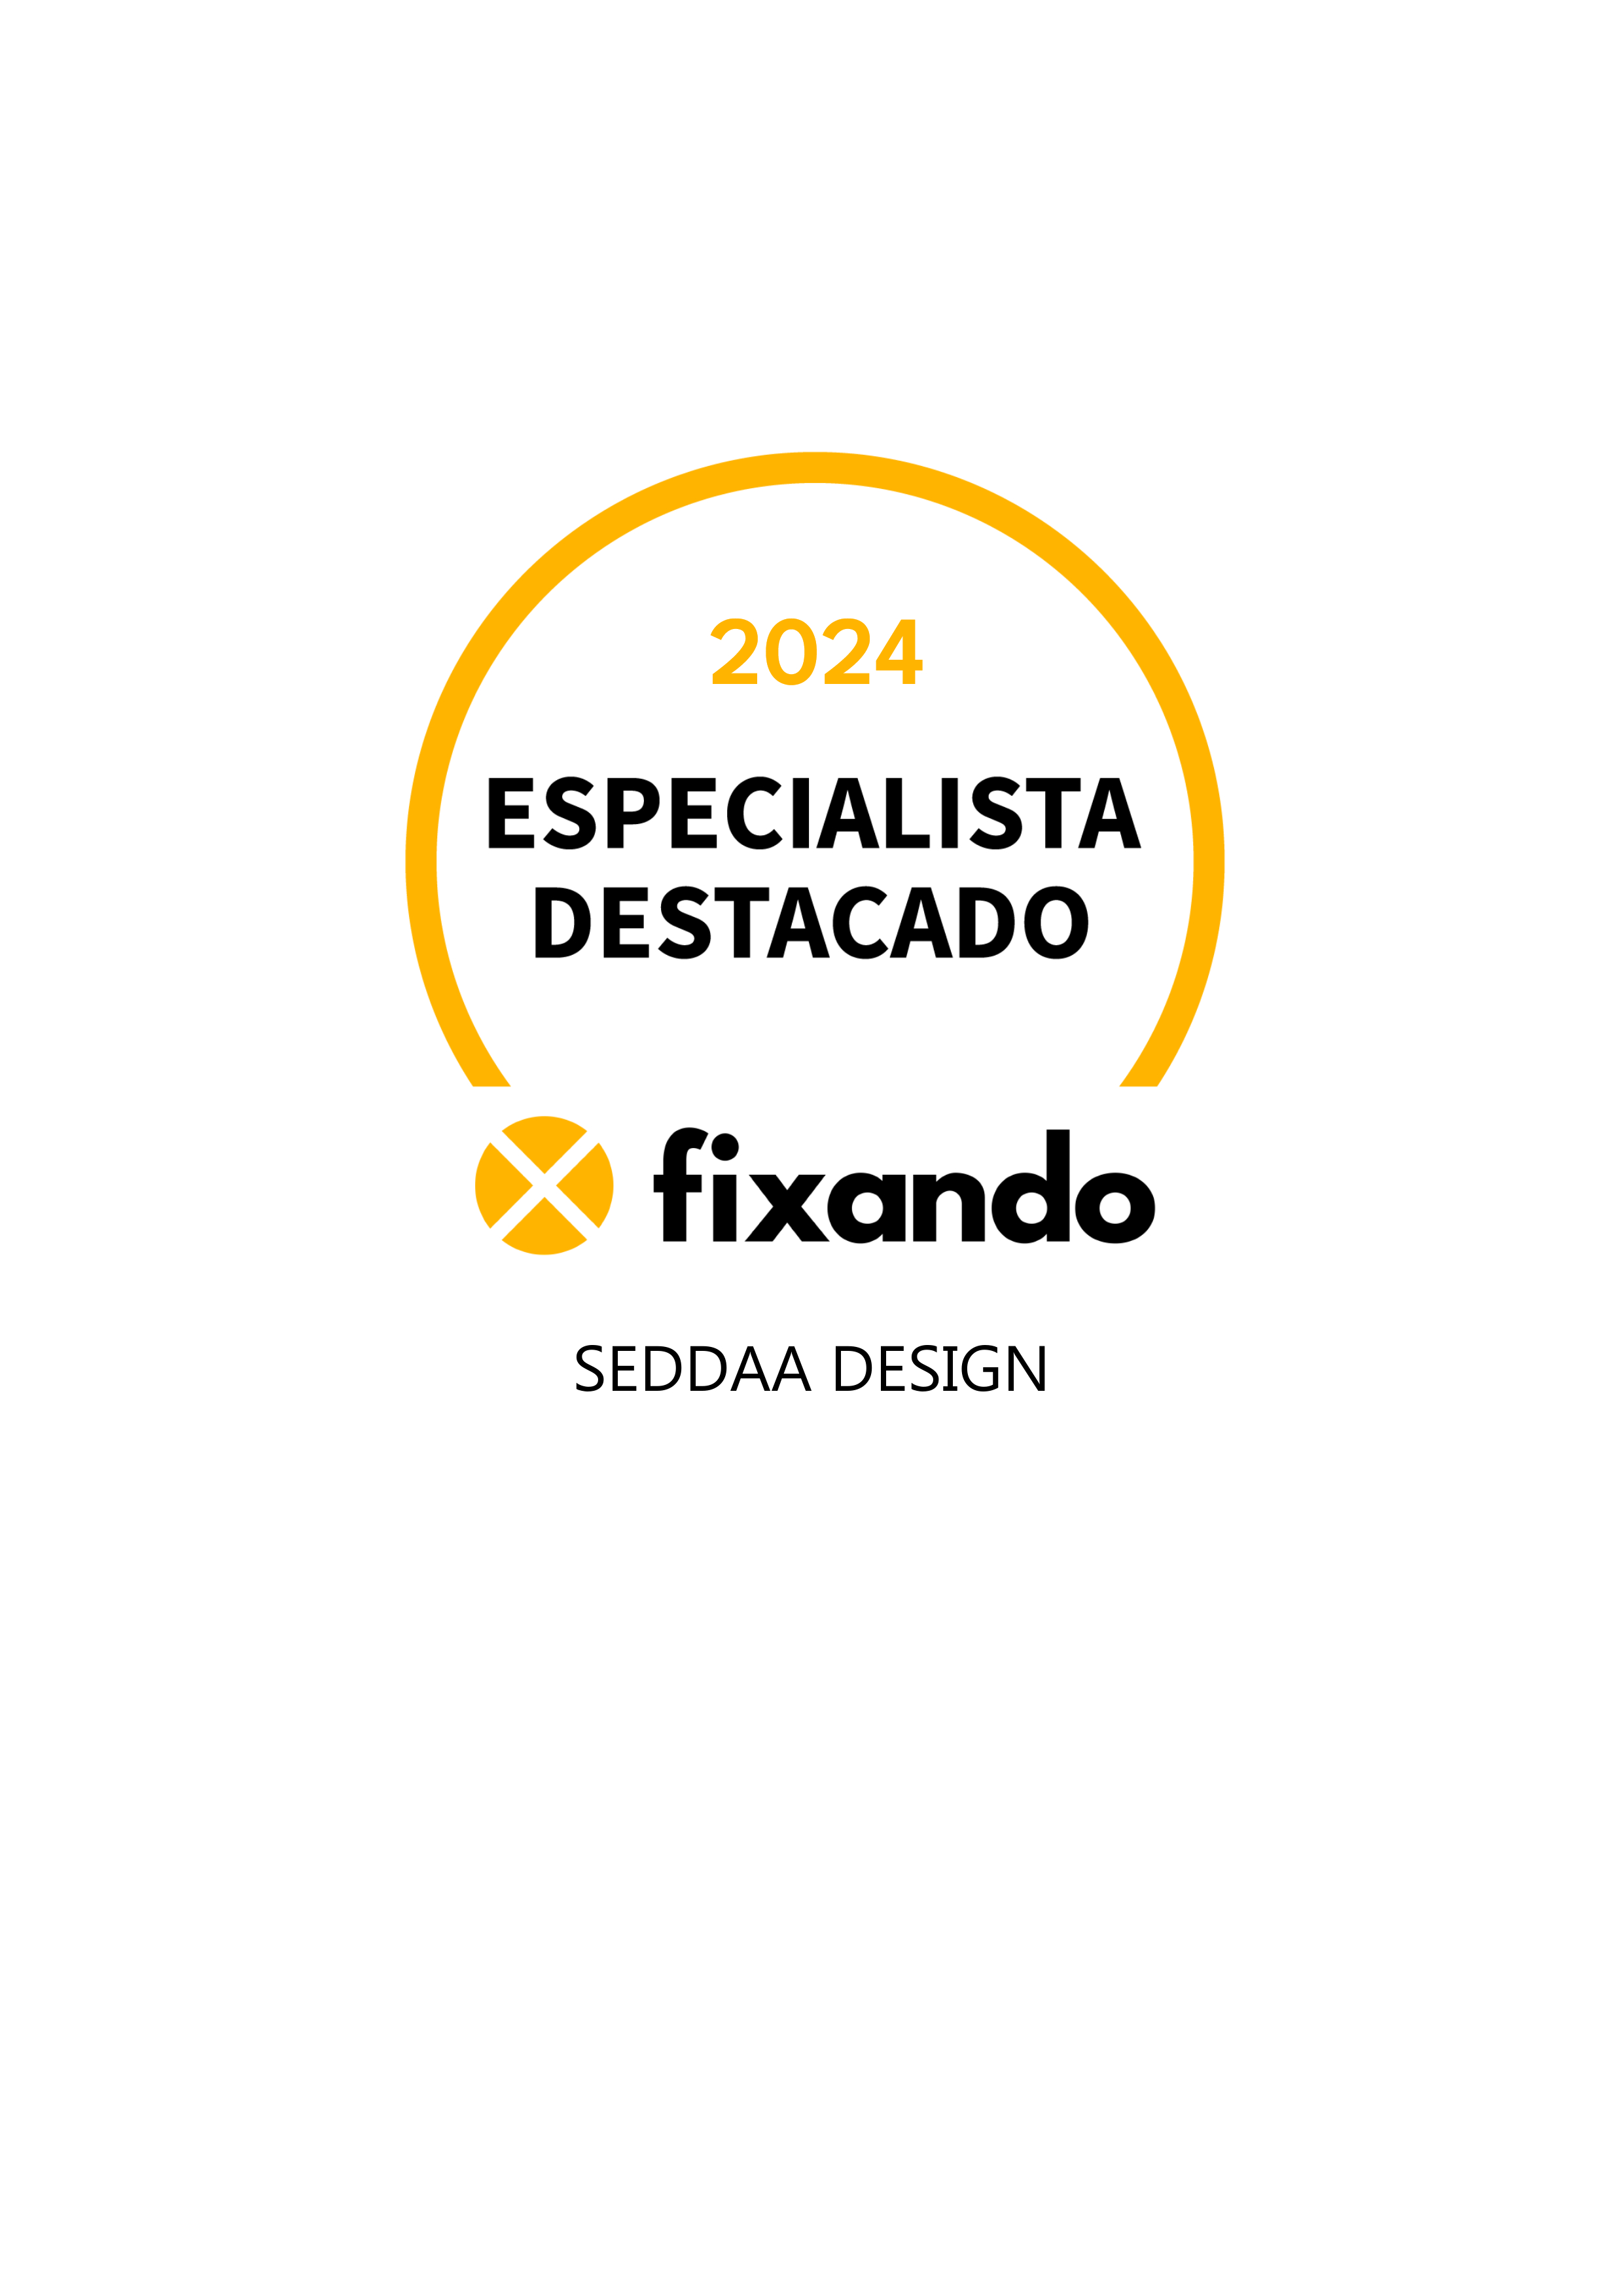 SEDDAA DESIGN - Cascais - Design Gráfico